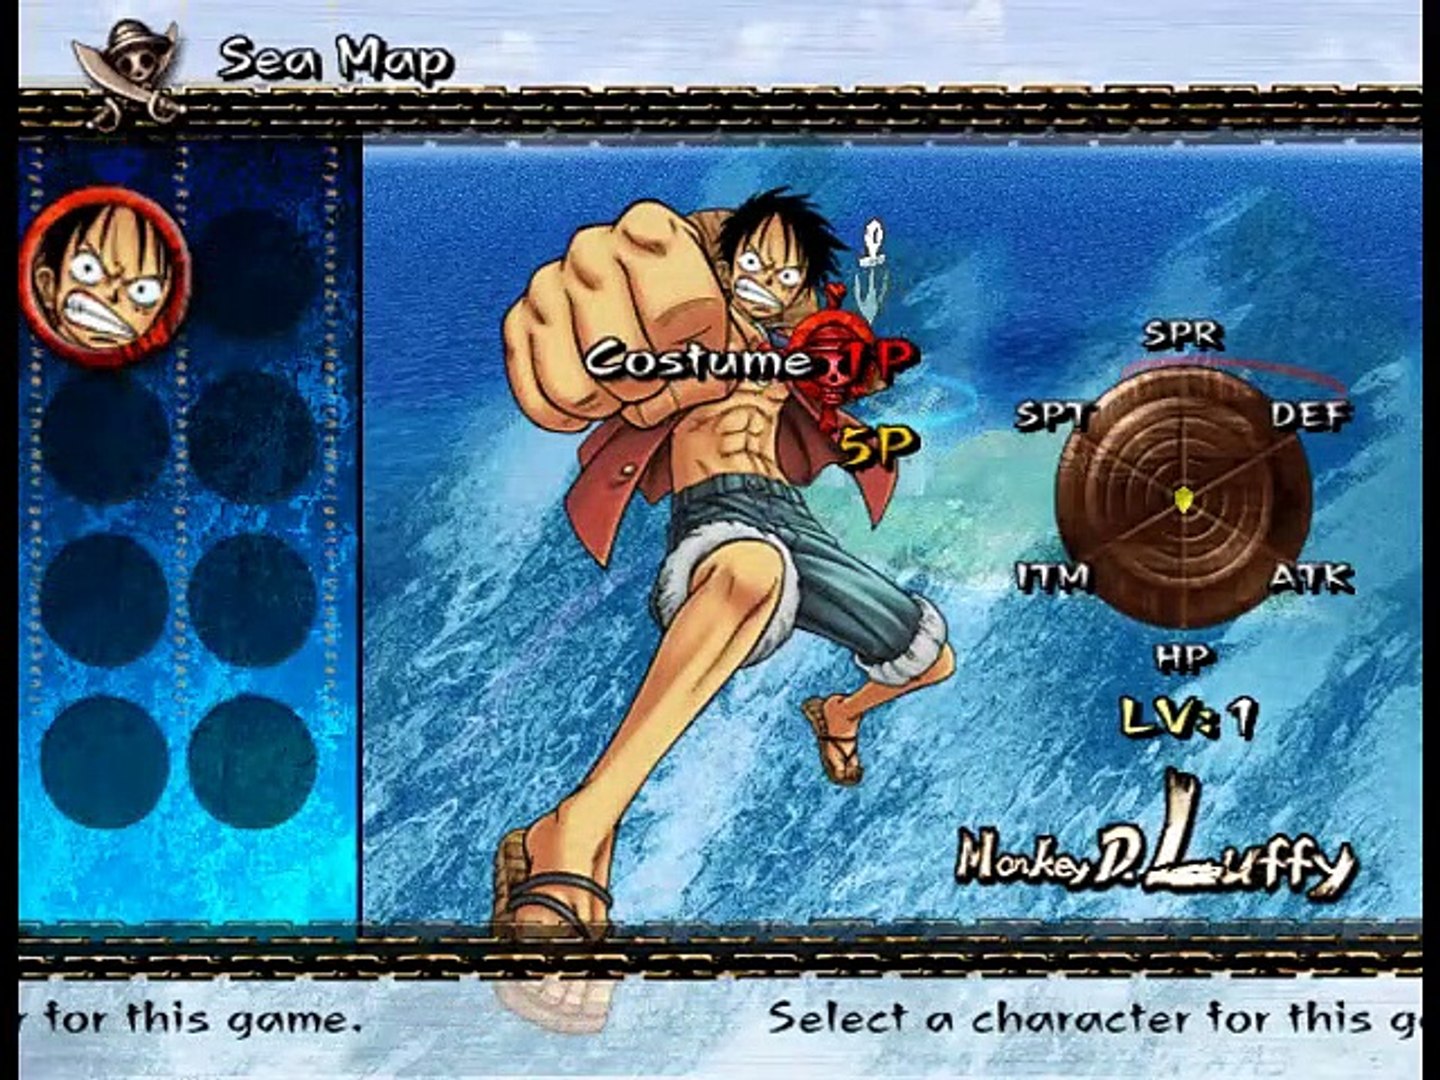 Shonen Jump's One Piece Grand Adventure - Nintendo Gamecube